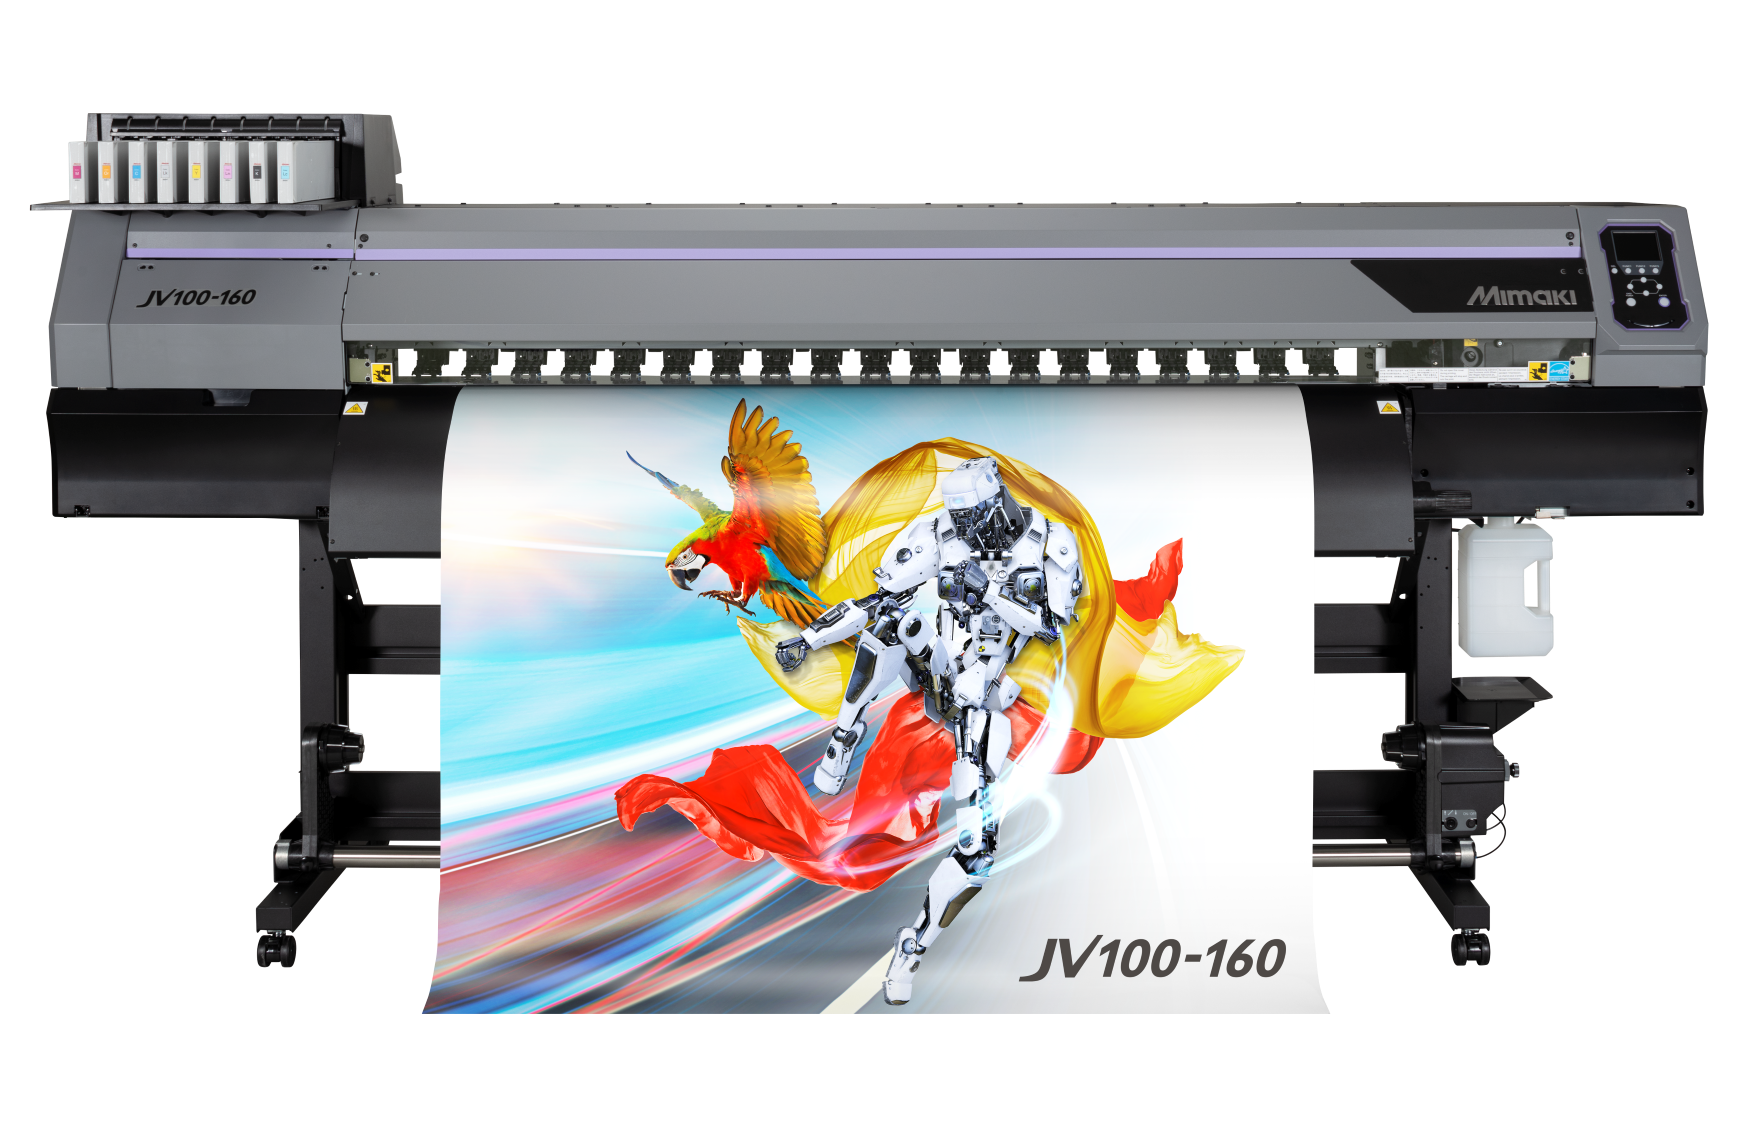 Jv100 160 製品情報 ミマキ